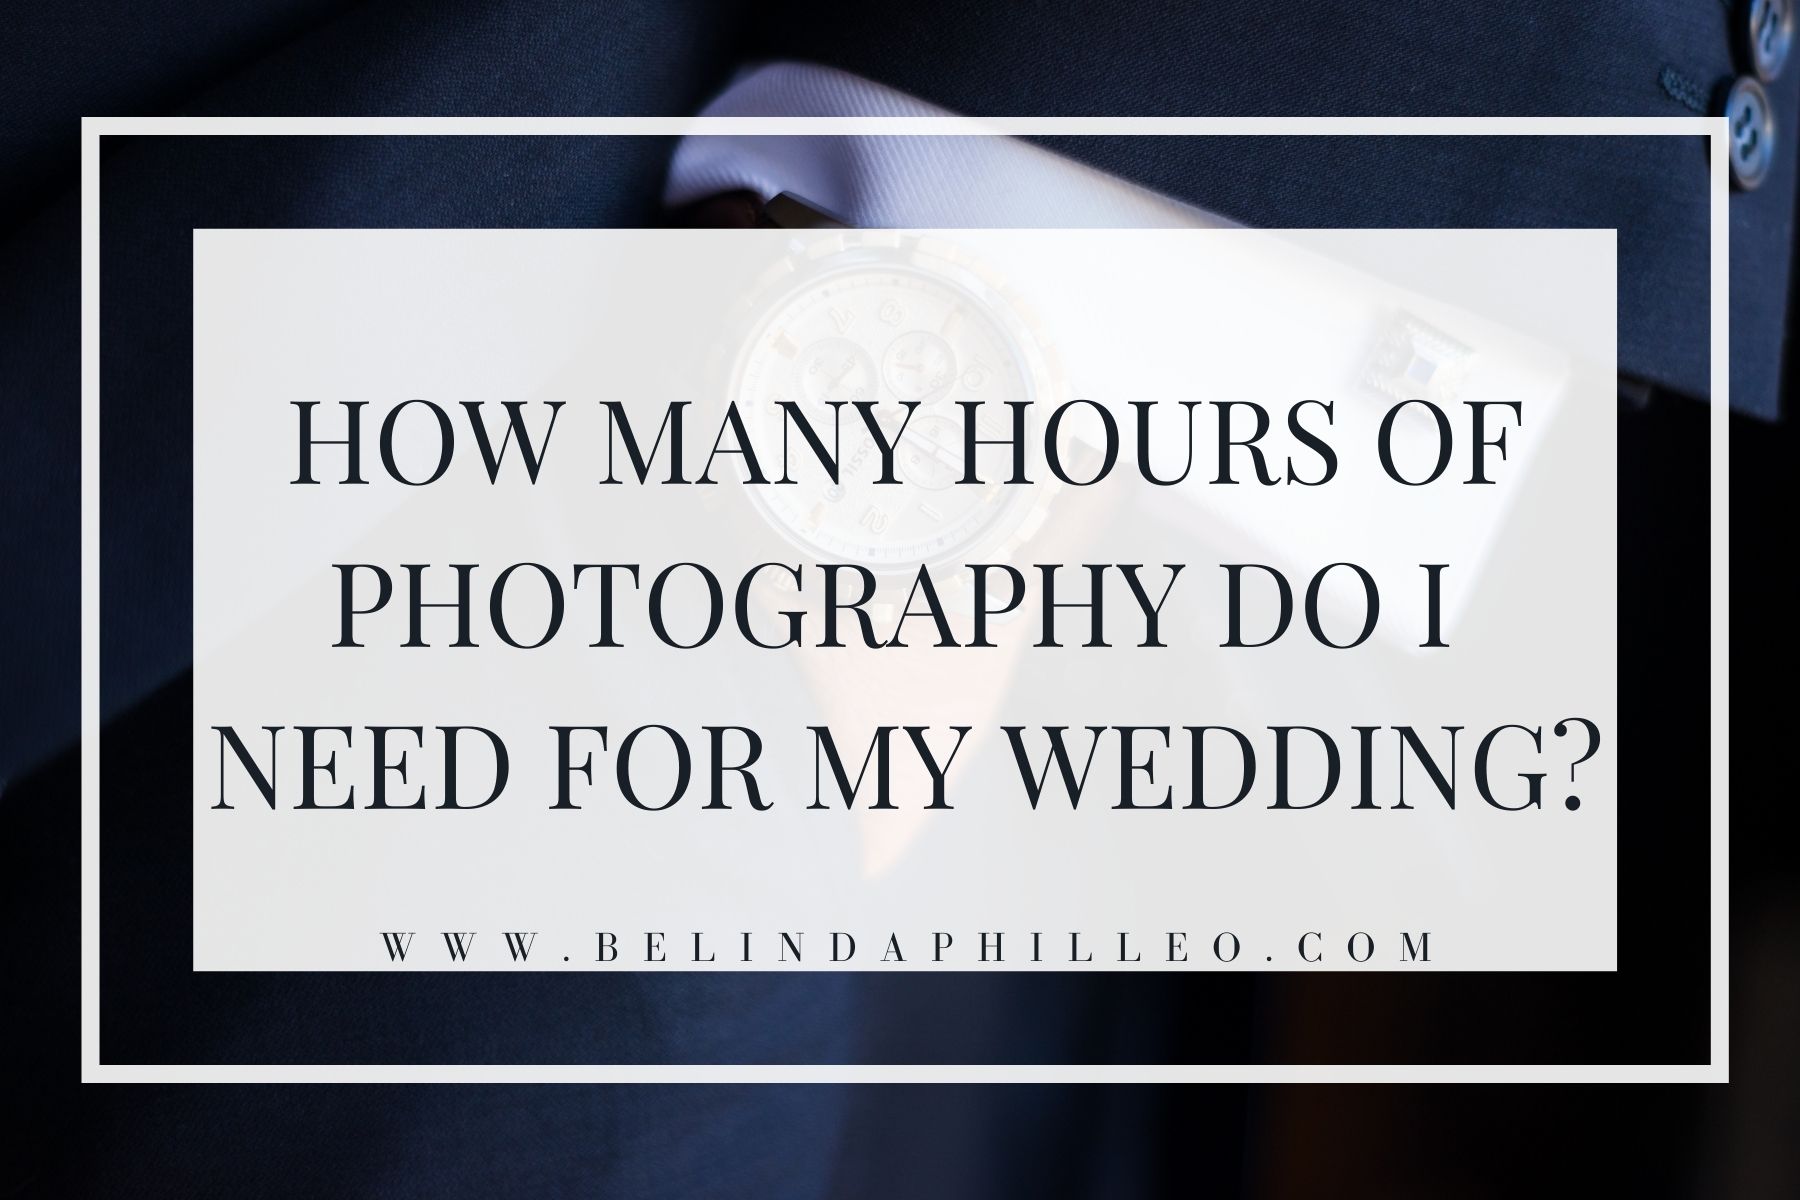 How many hours of wedding photography do I need?